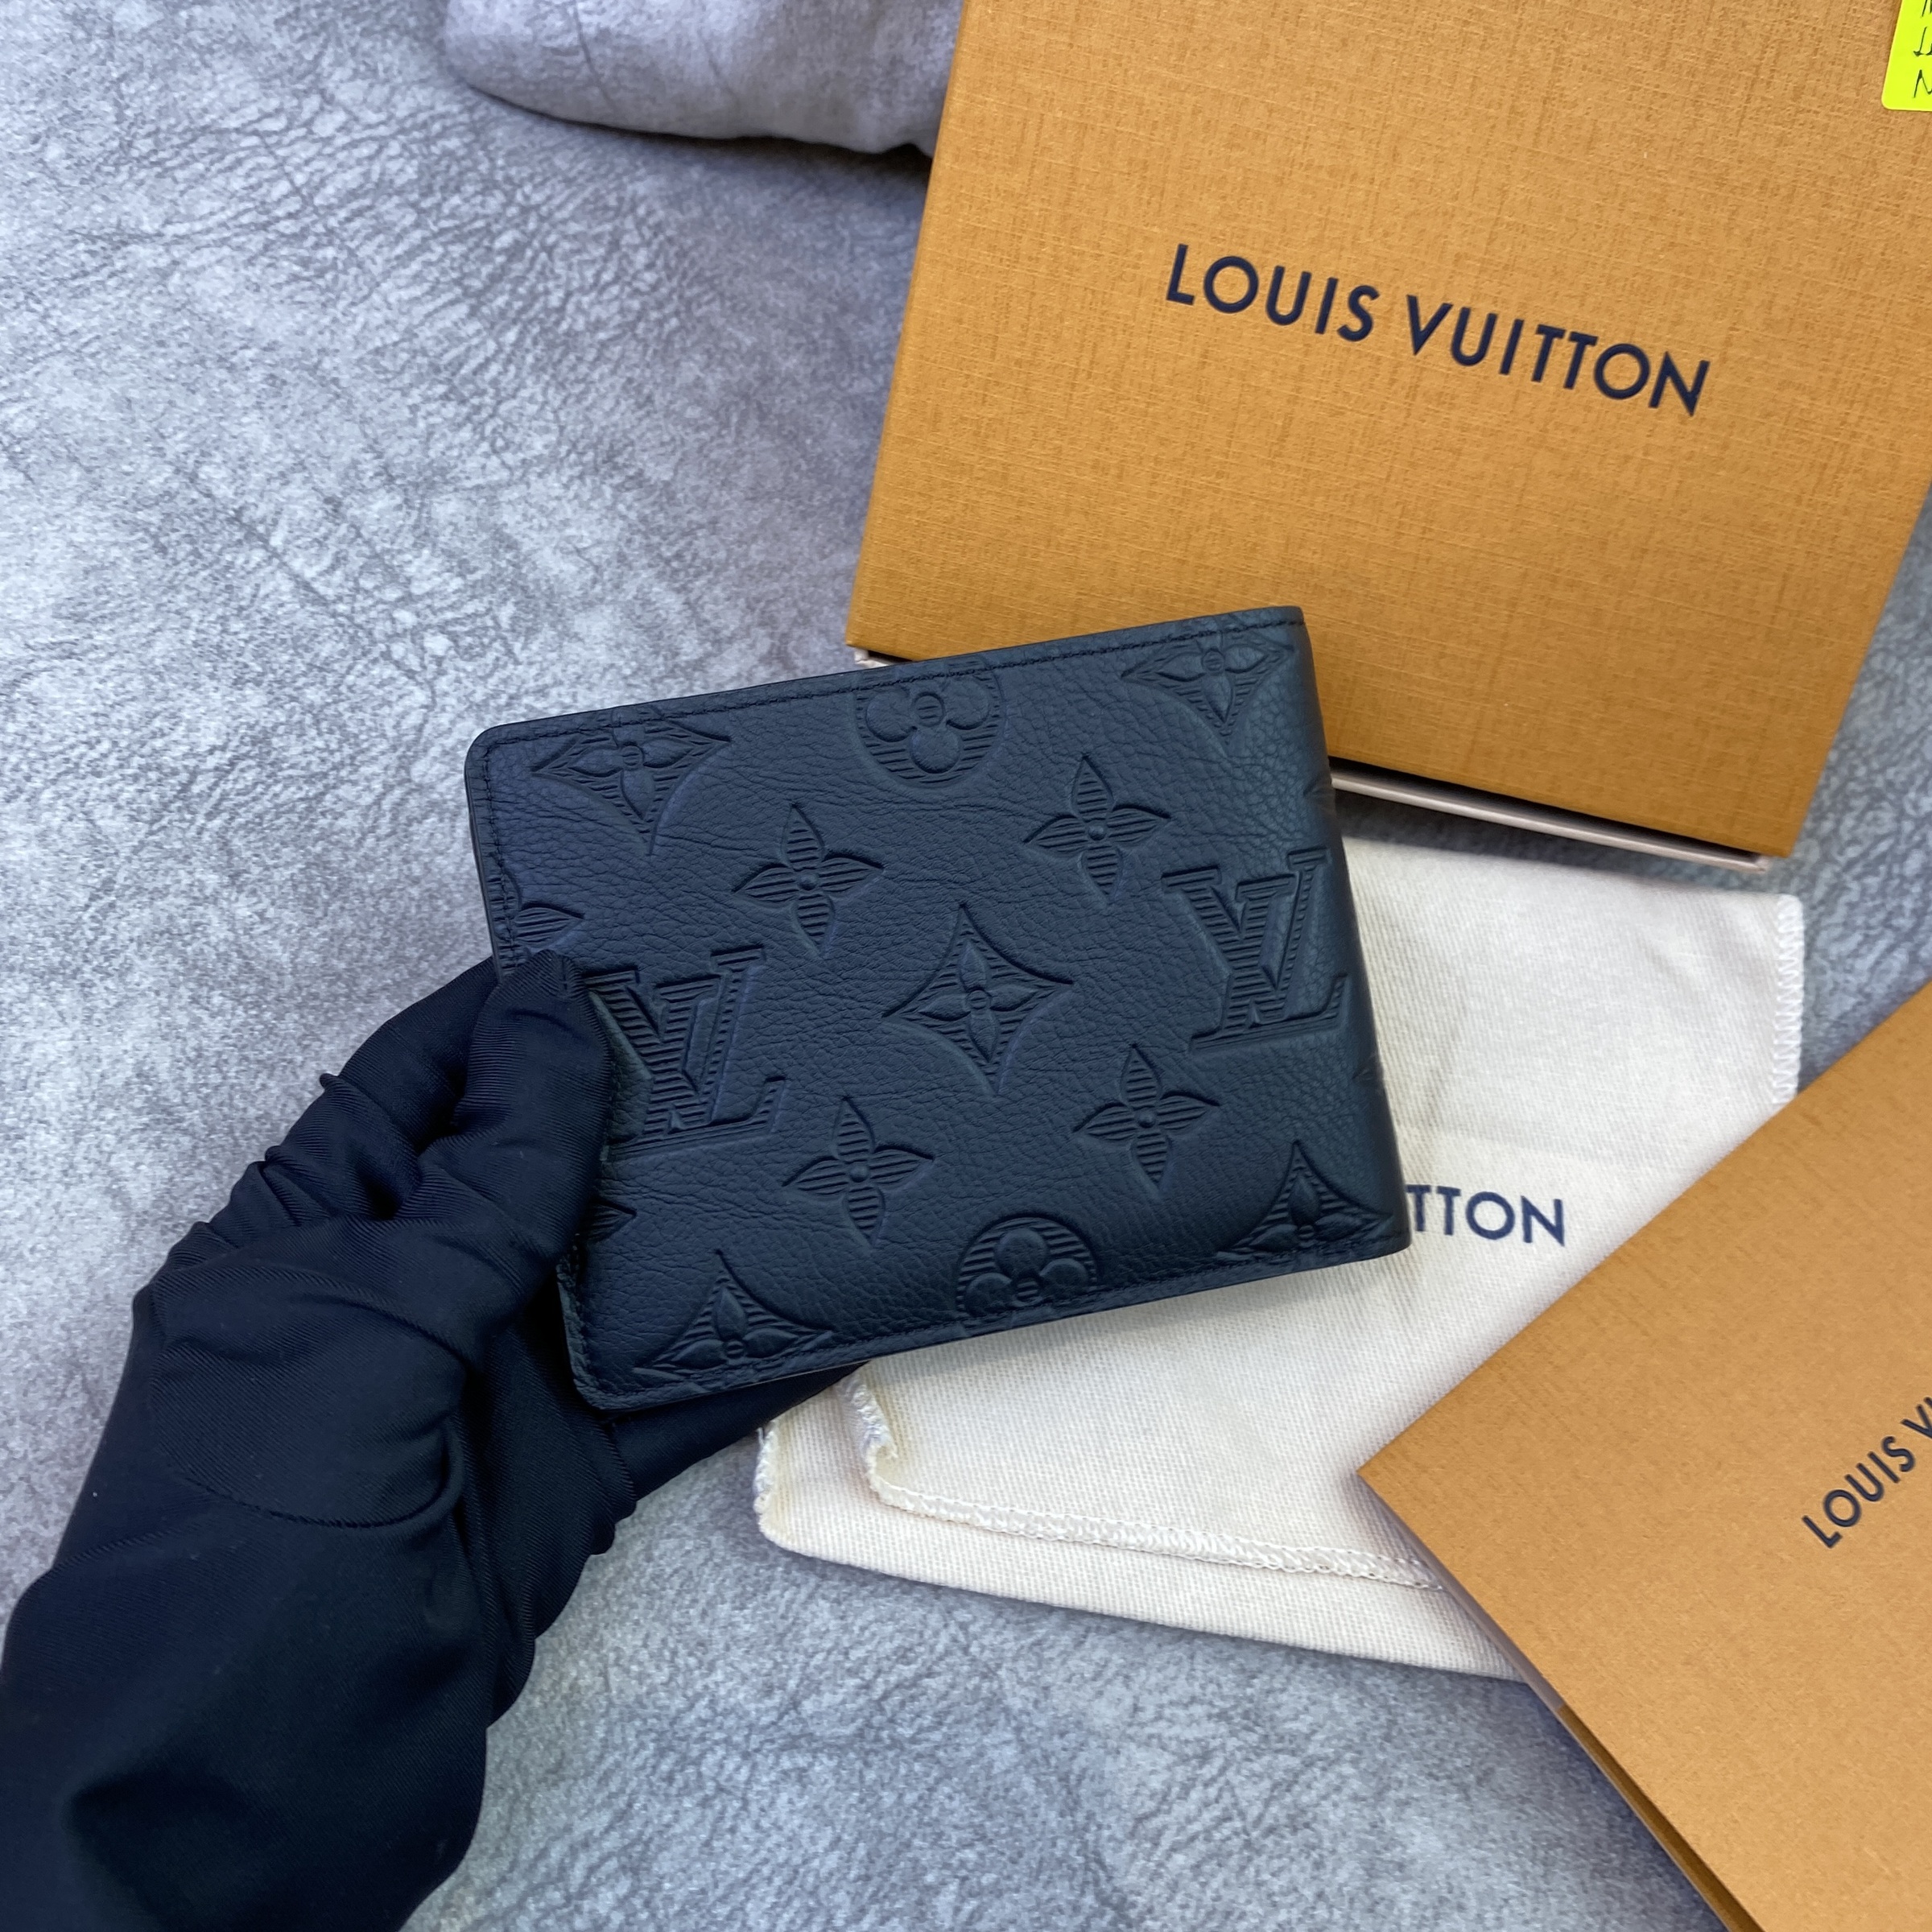 Pre-owned Louis Vuitton Multiple Wallet Monogram Shadow Black